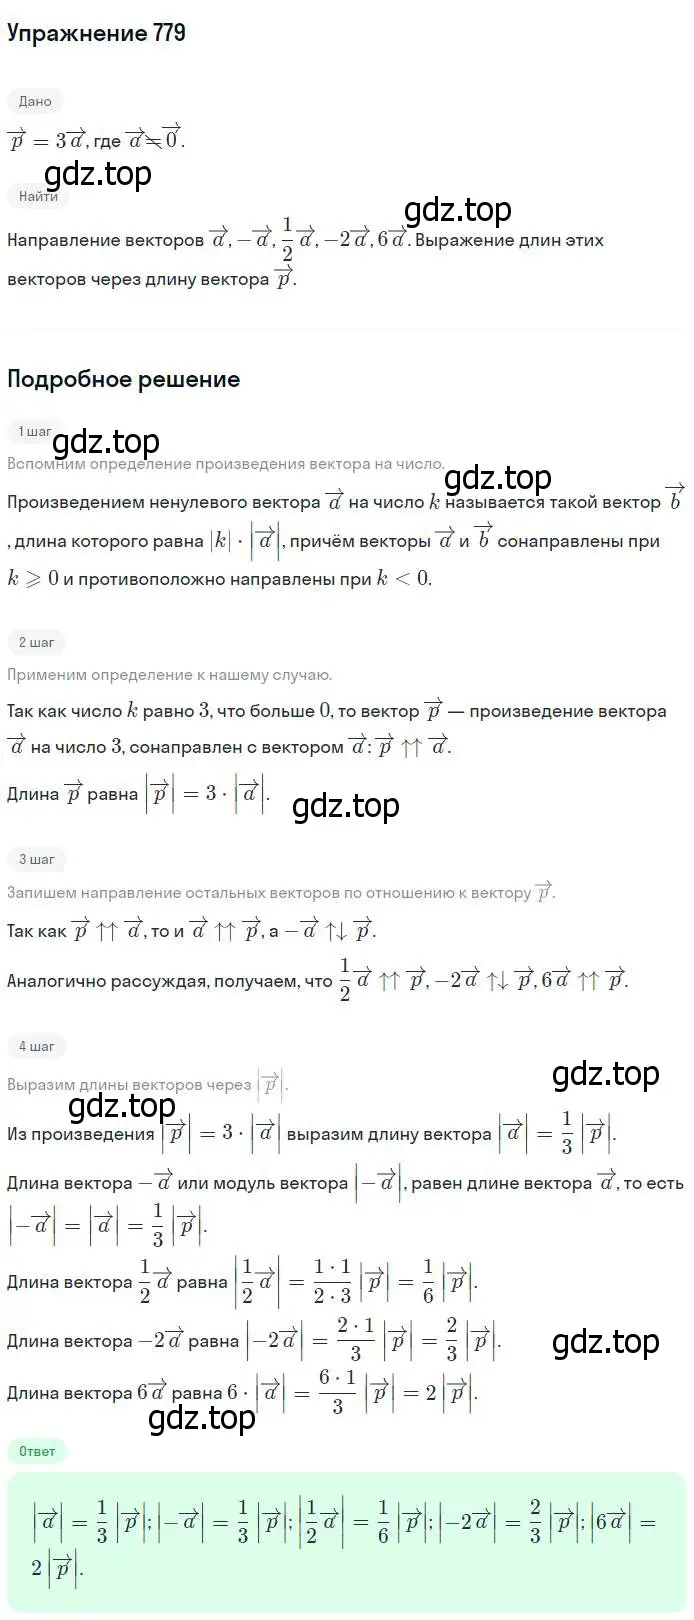 Решение номер 779 (страница 206) гдз по геометрии 7-9 класс Атанасян, Бутузов, учебник